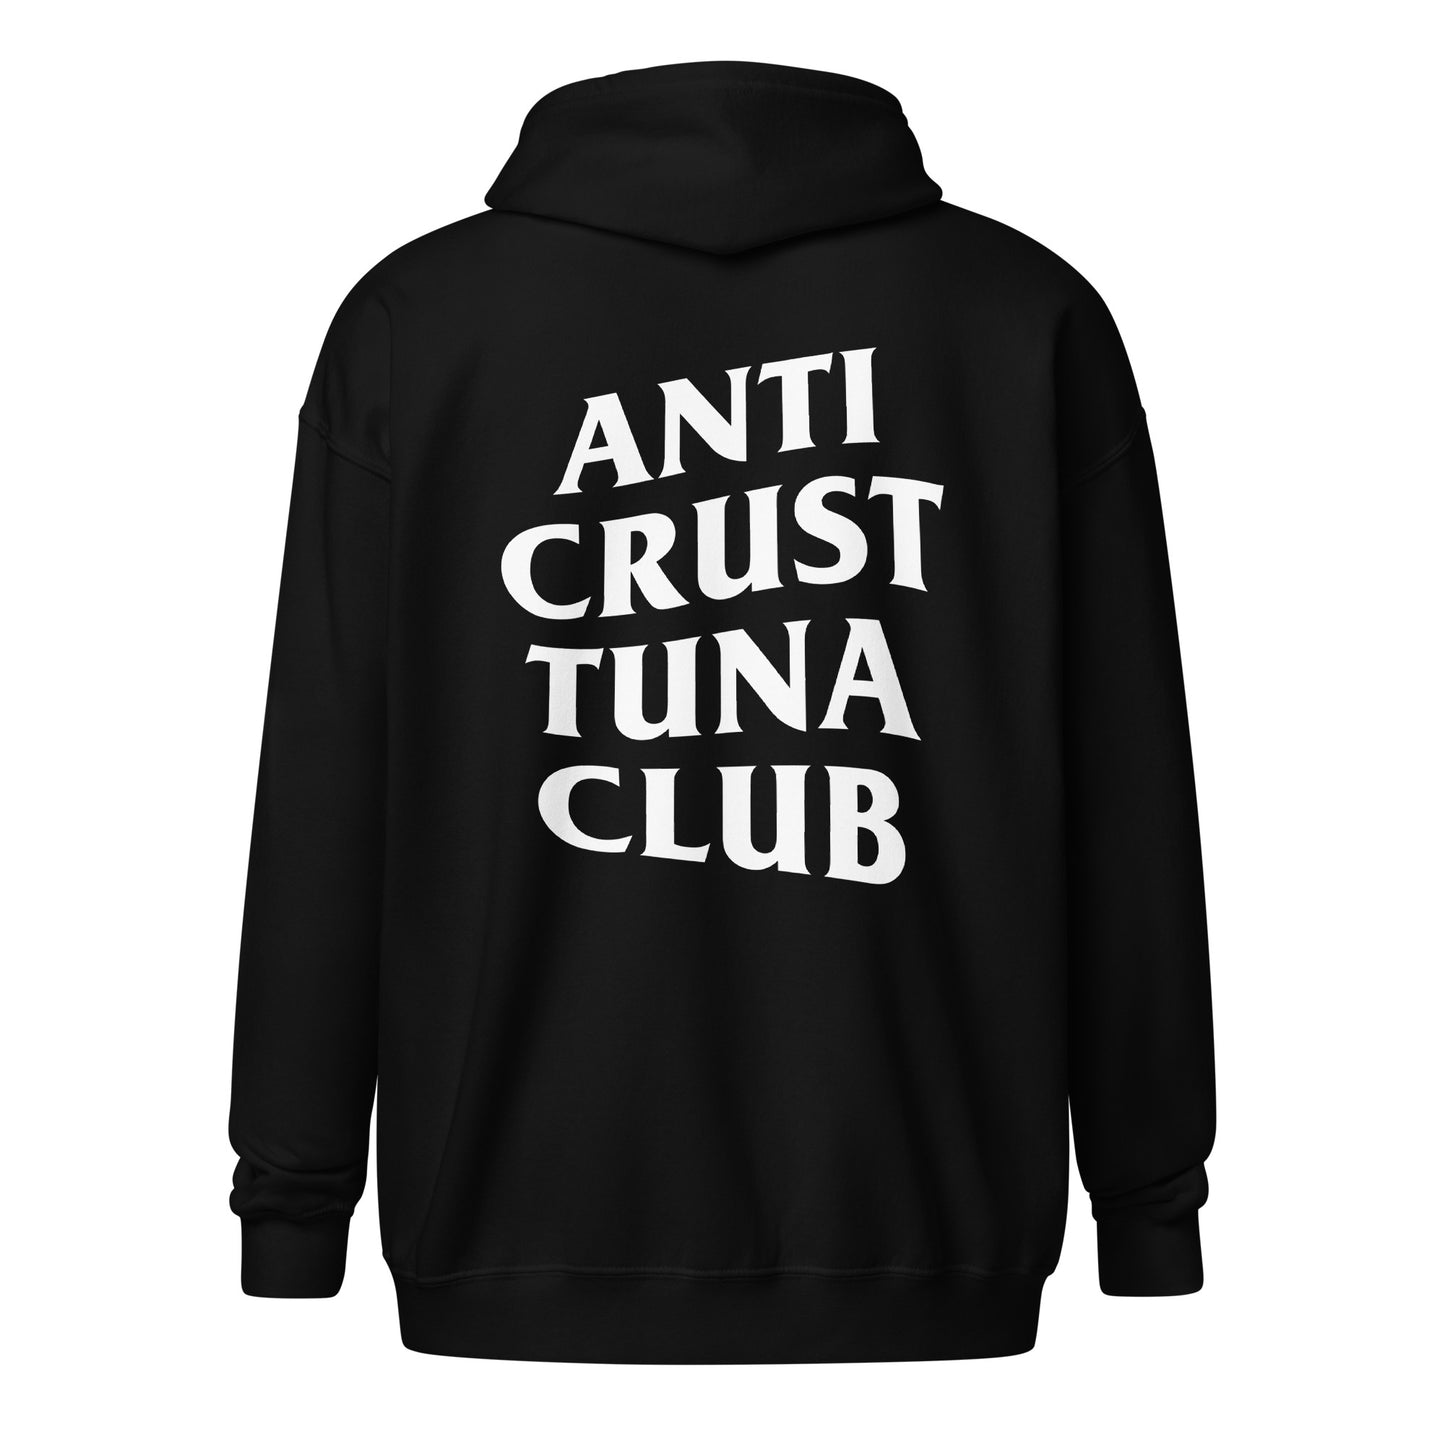 Anti Crust Tuna Club Zip Hoodie